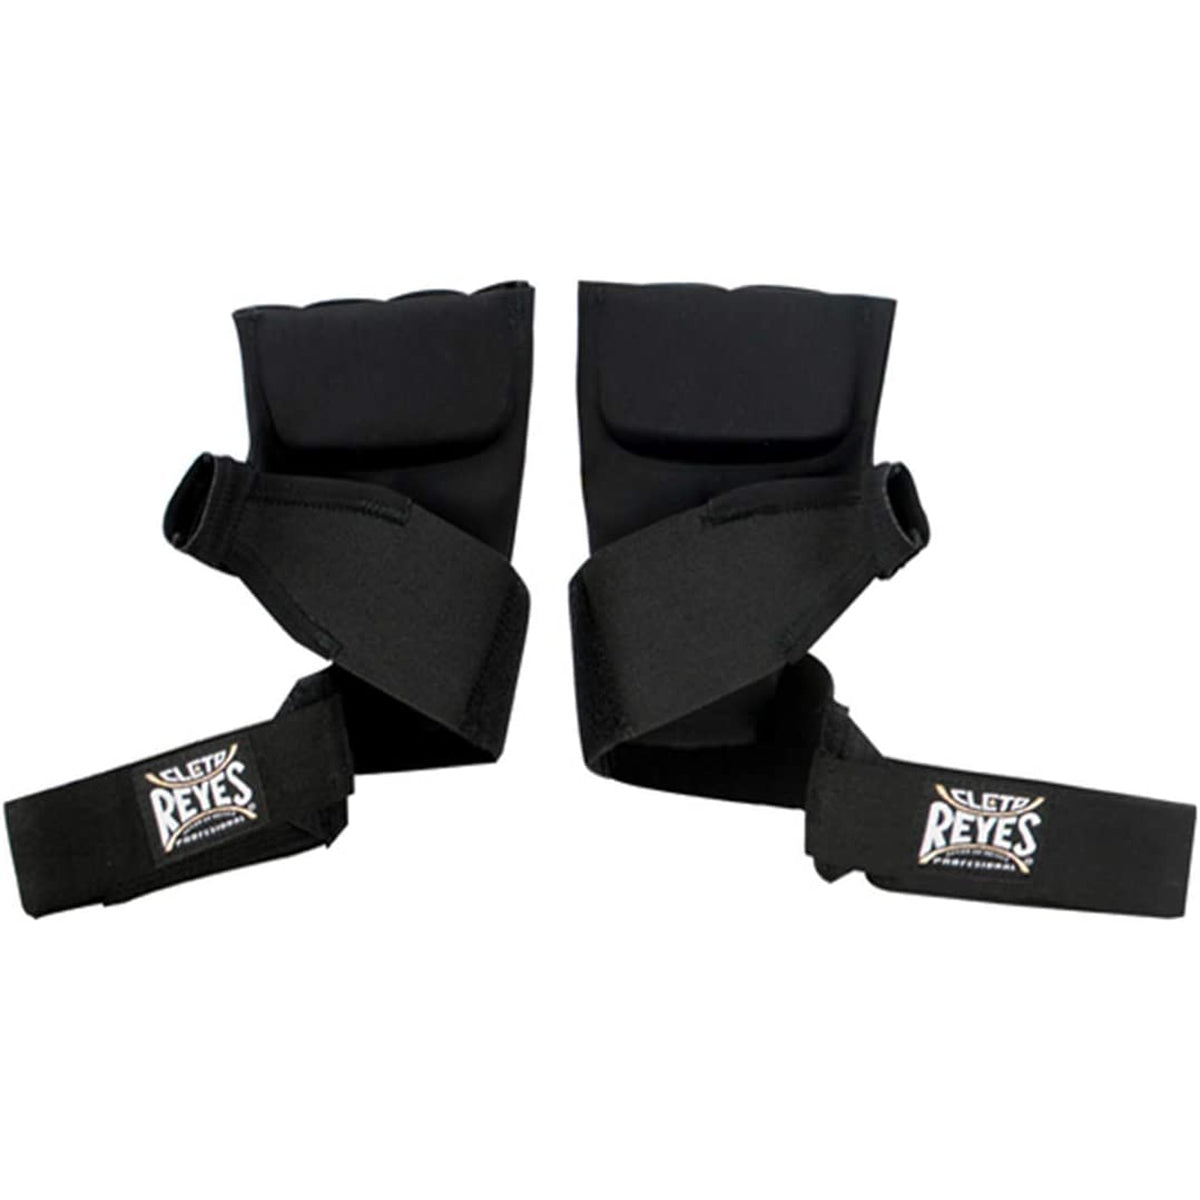 Cleto Reyes Evolution Boxing Handwraps - Small - Black Cleto Reyes